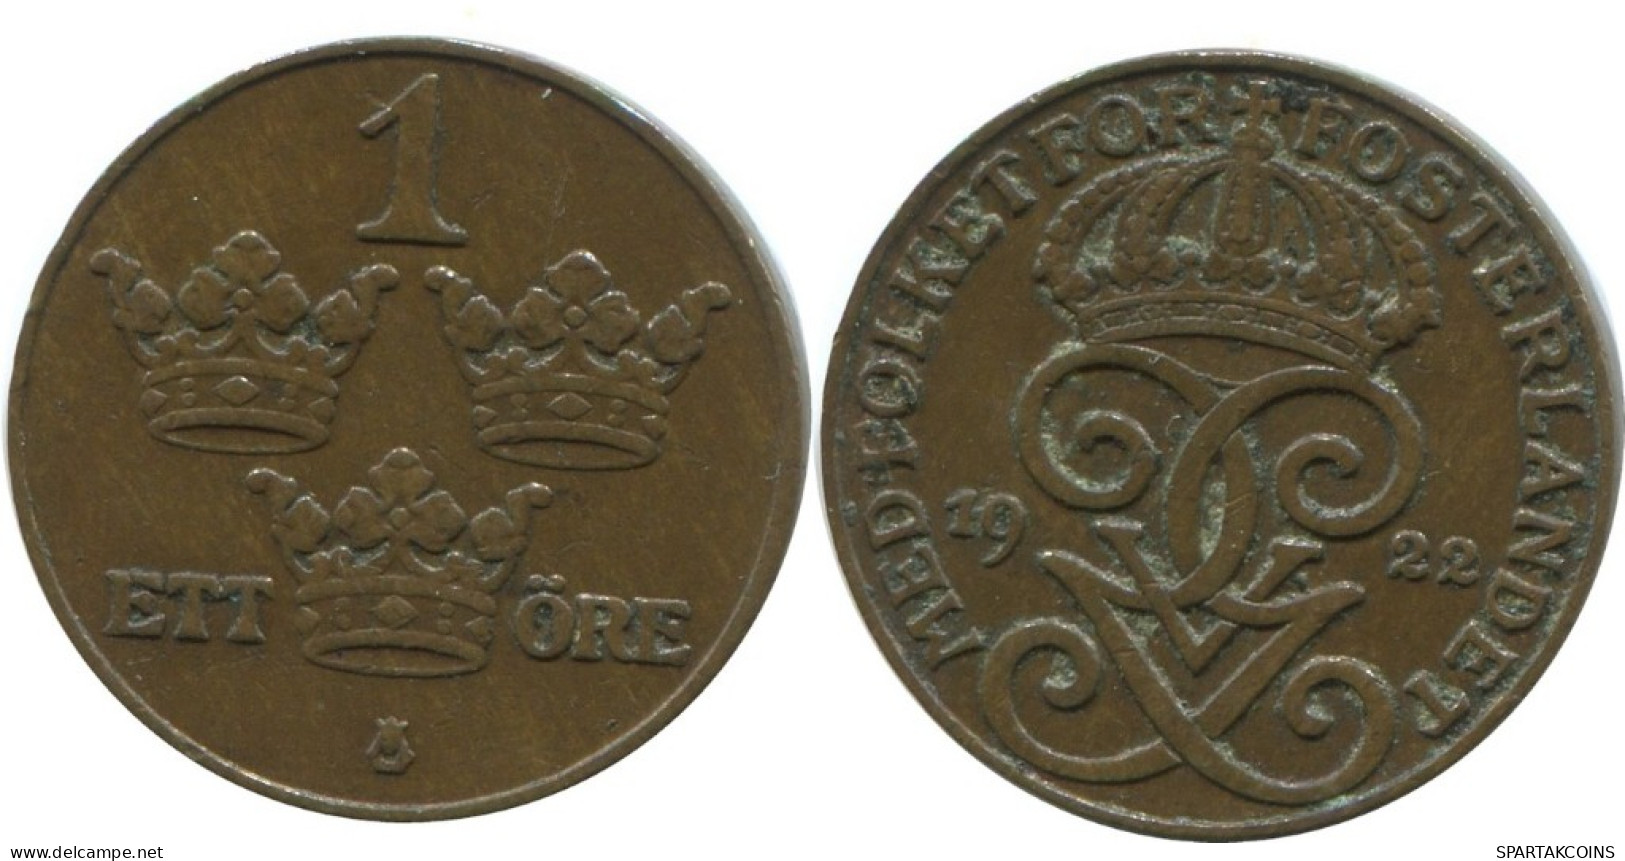 1 ORE 1922 SWEDEN Coin #AD339.2.U.A - Sweden